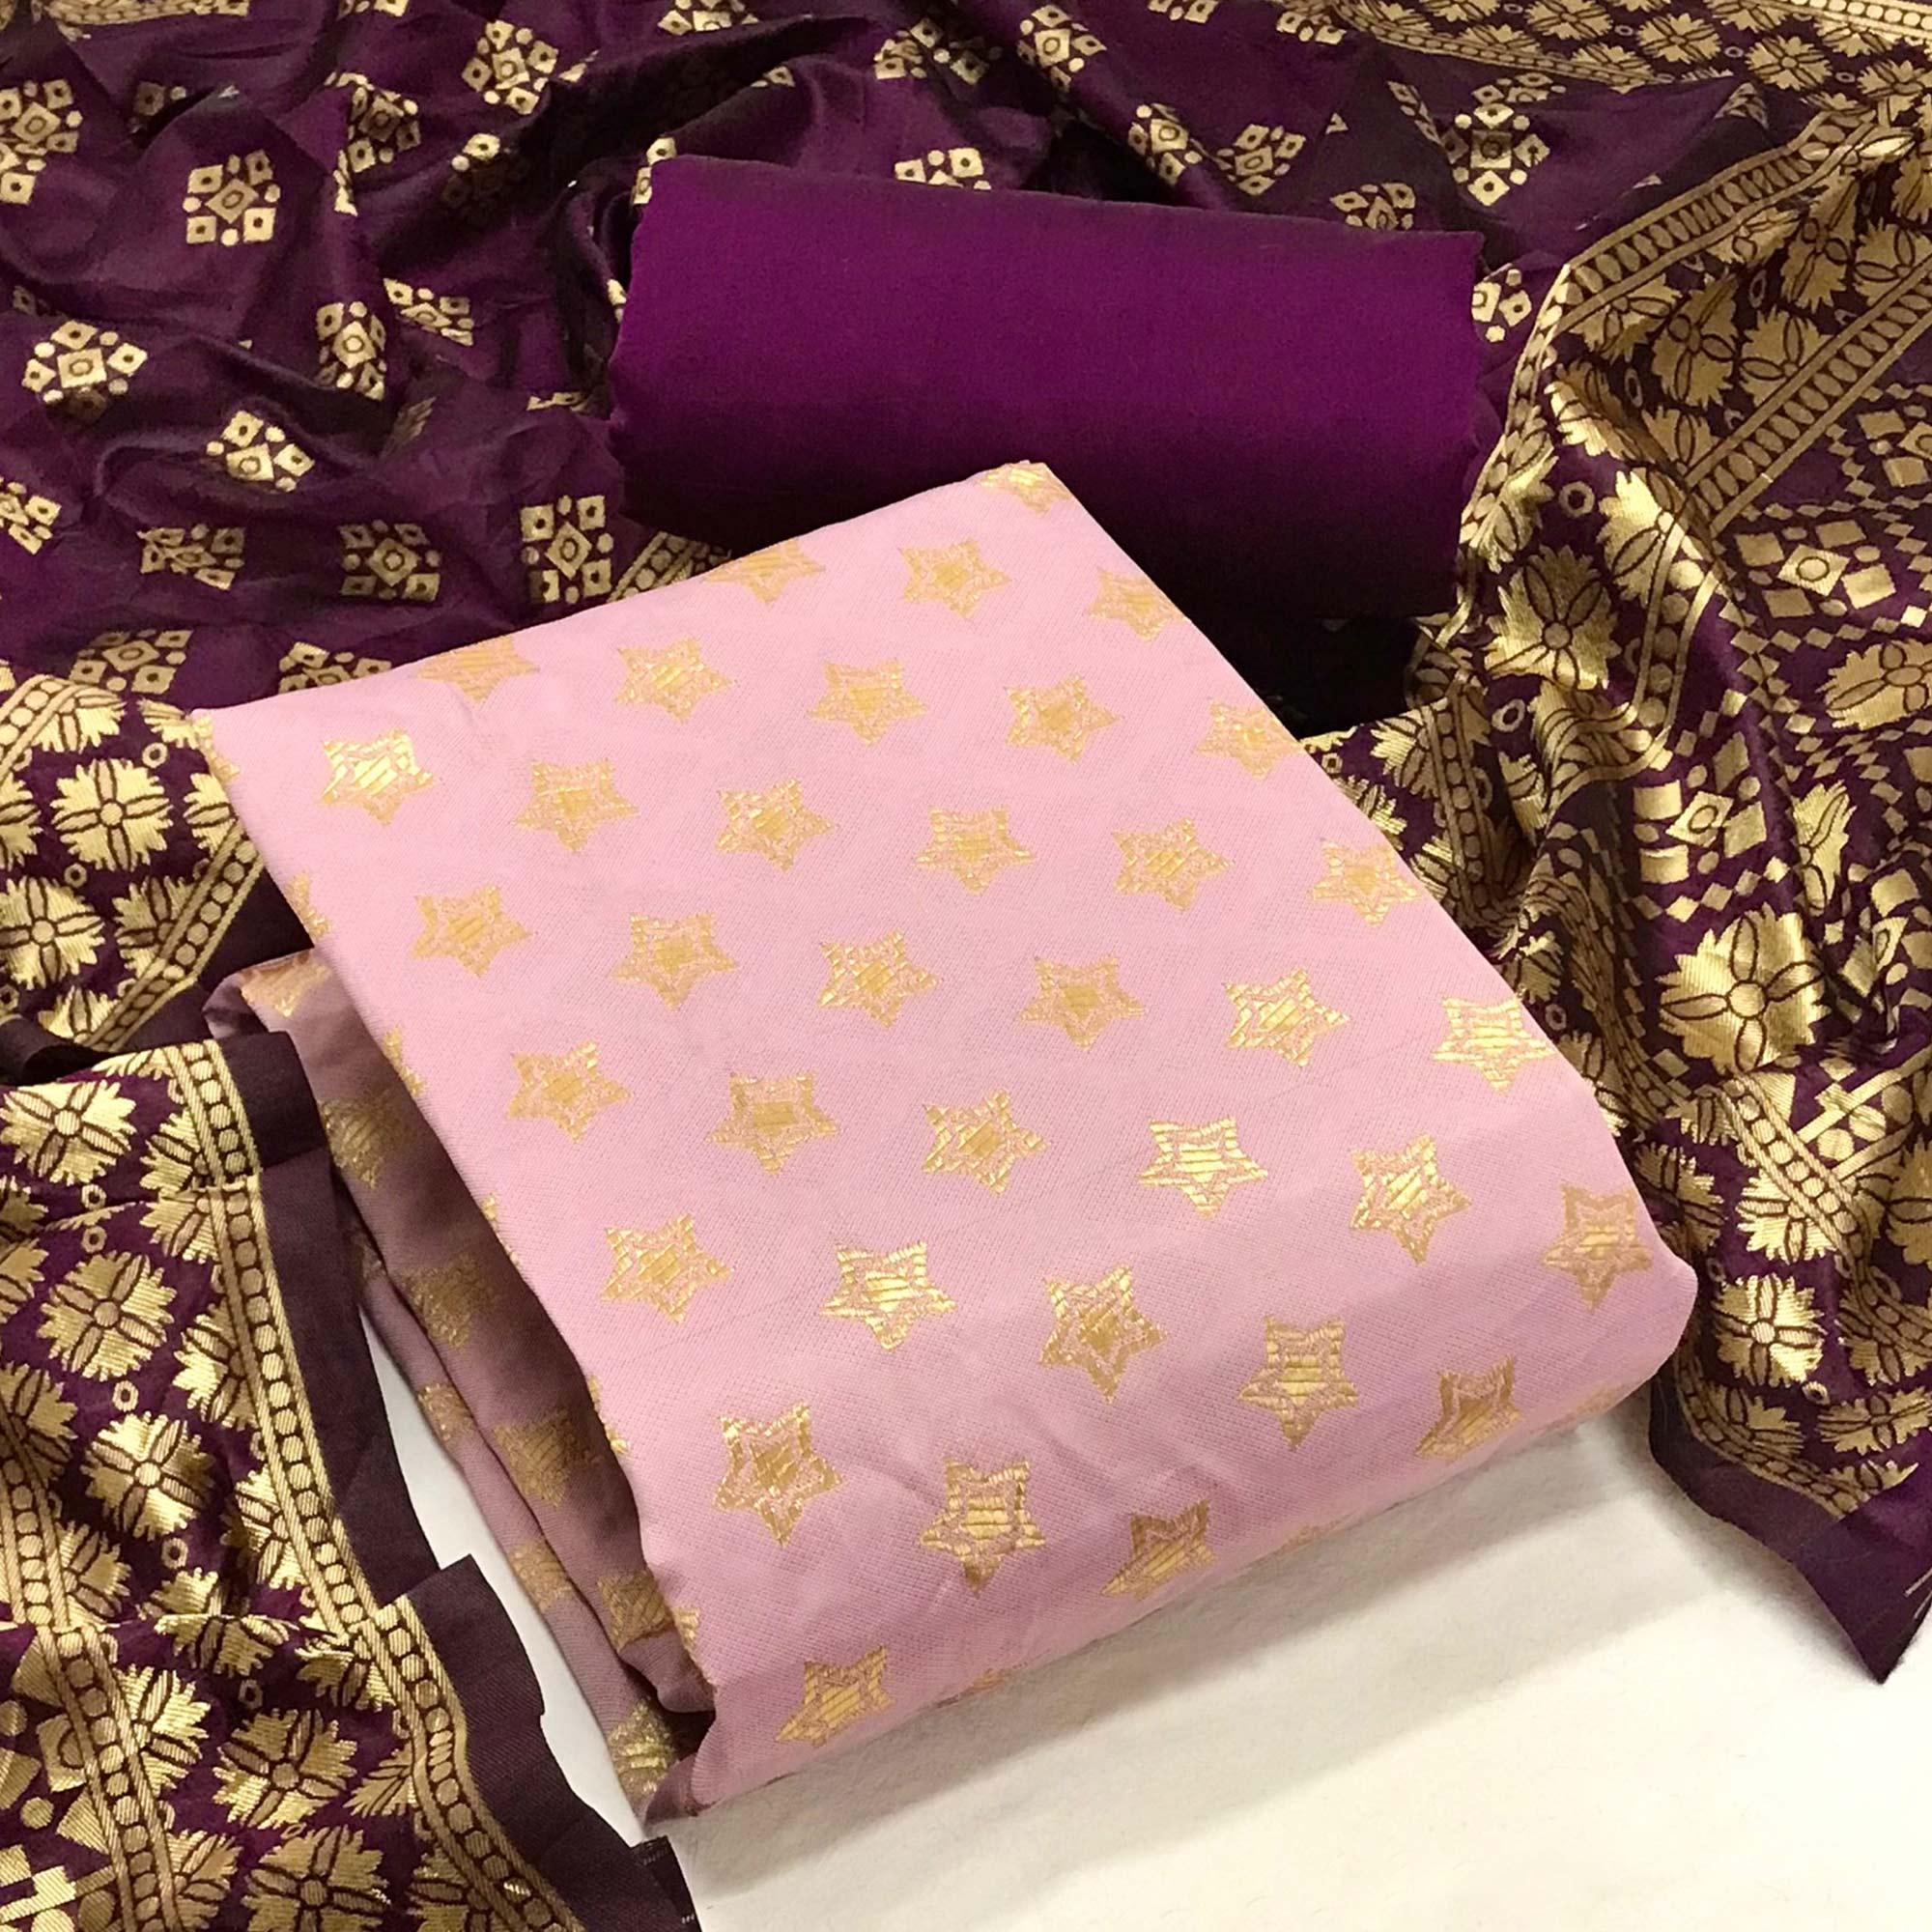 Baby Pink Festive Wear Woven Banarasi Silk Dress Material - Peachmode